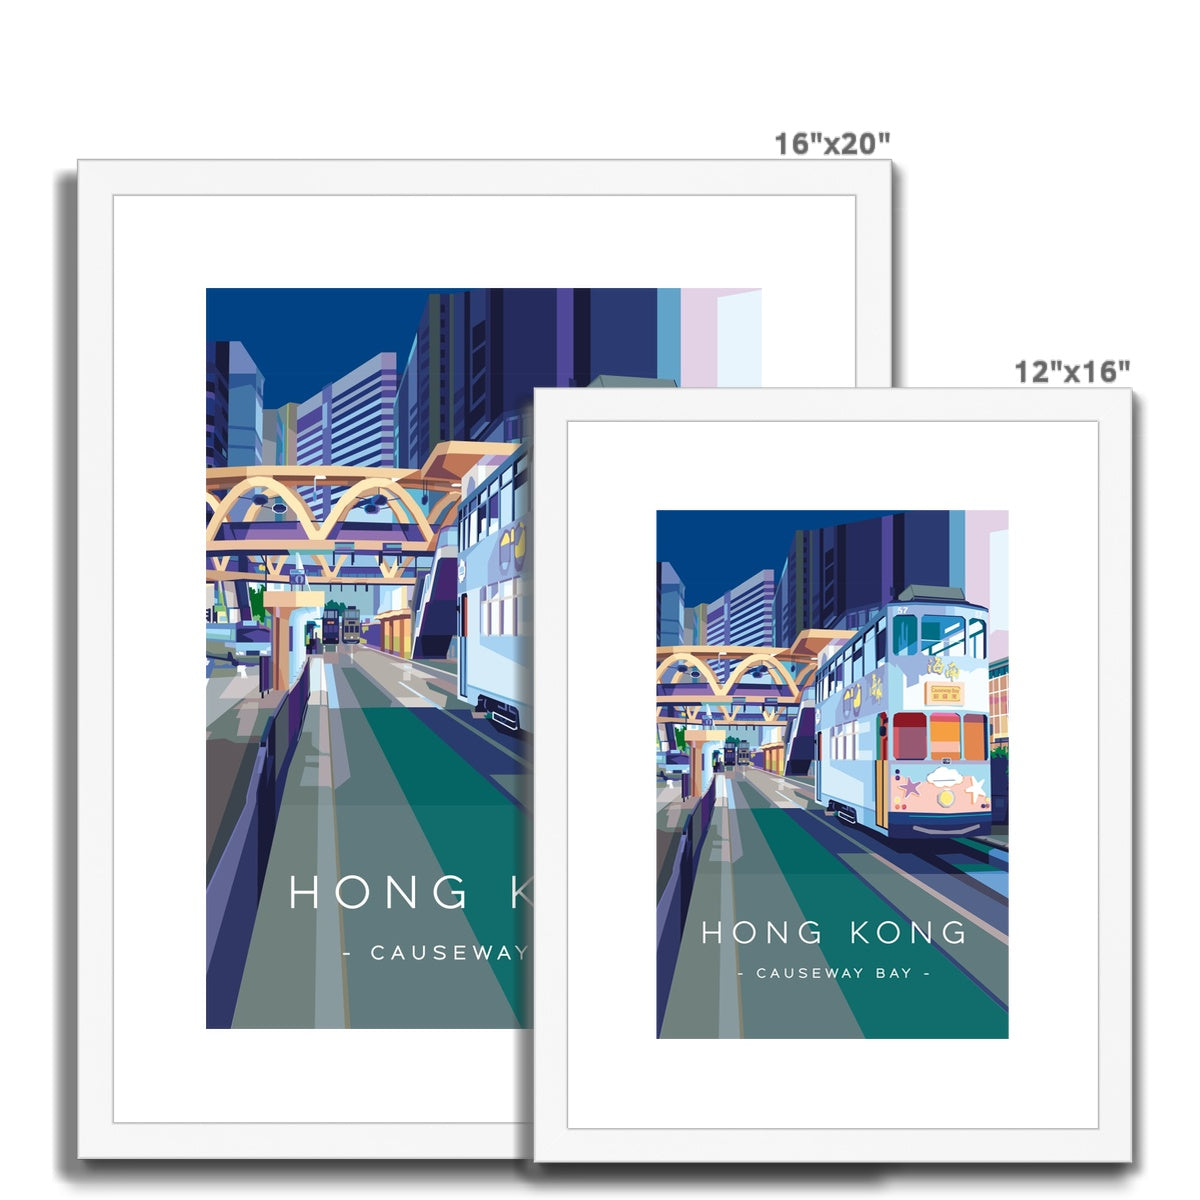 Hong Kong Travel - Causeway Bay  Framed & Mounted Print